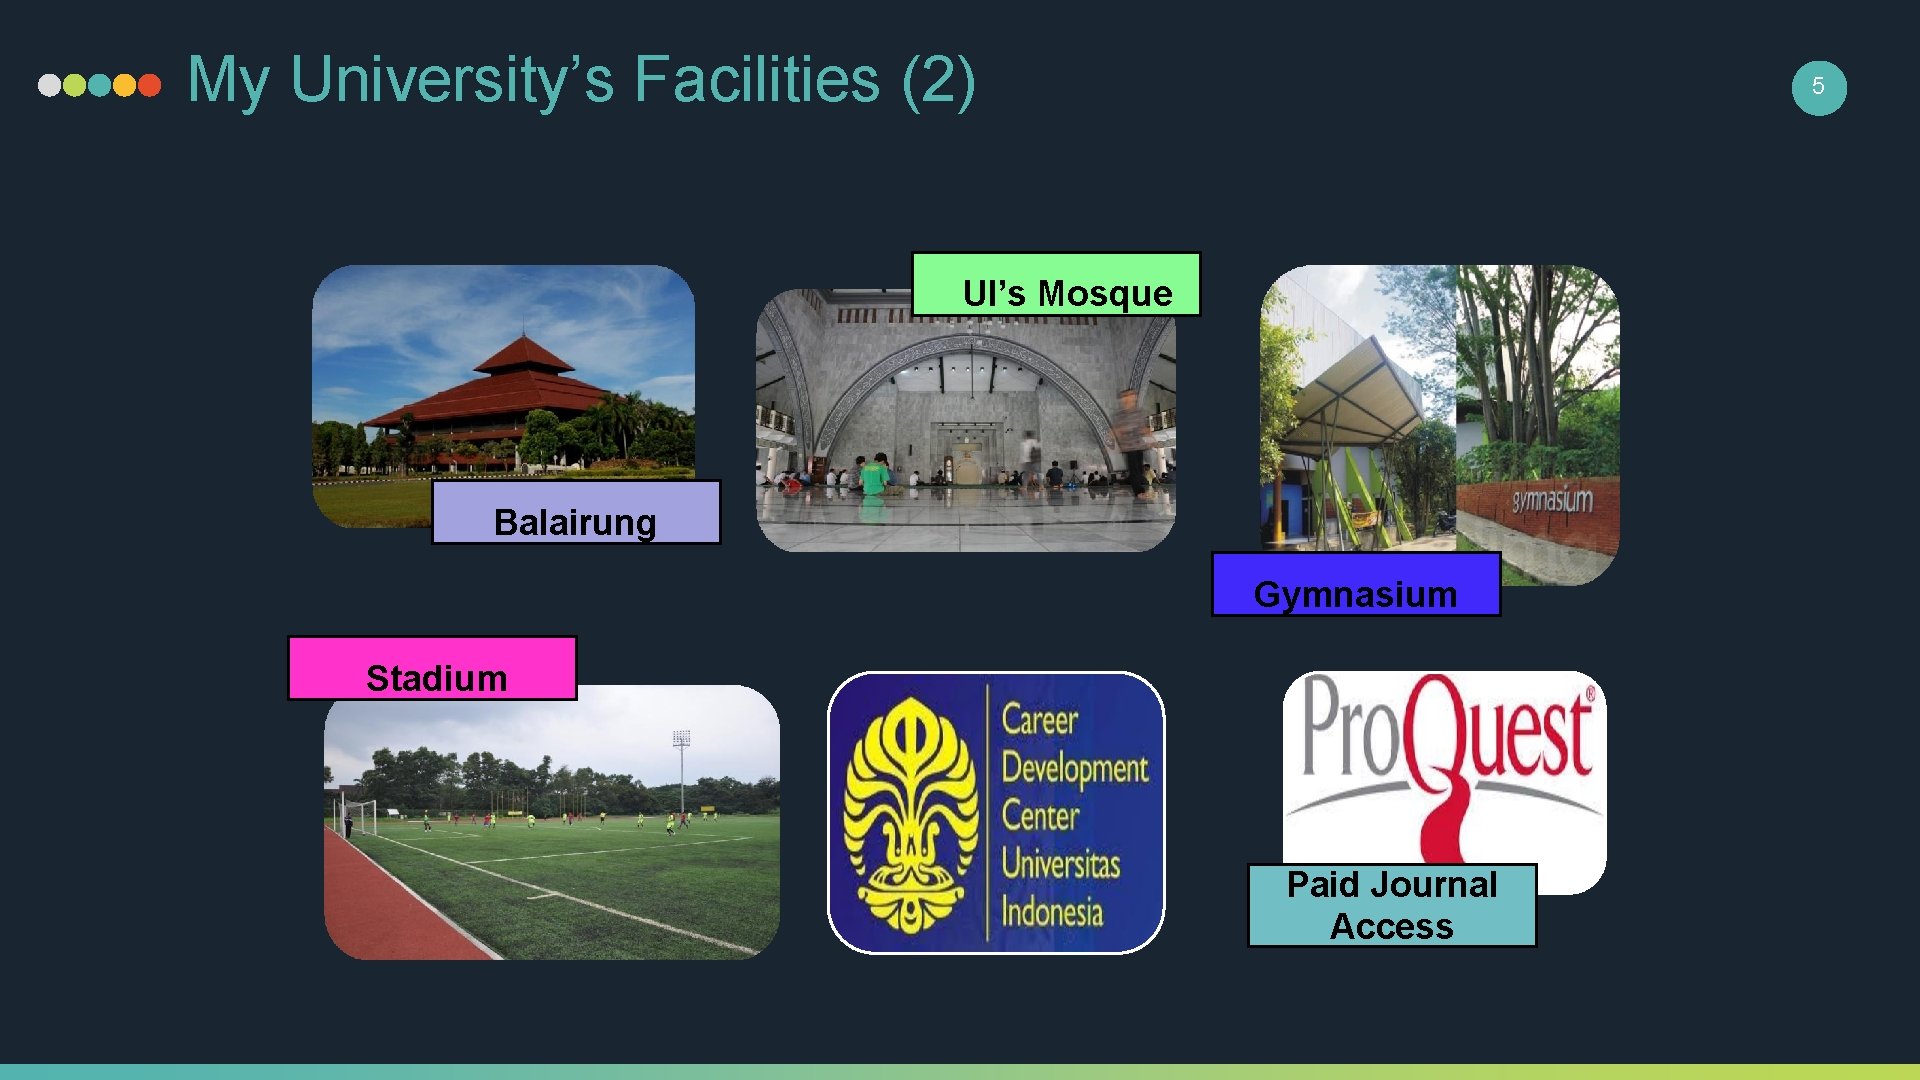 My University’s Facilities (2) 5 UI’s Mosque Balairung Gymnasium Stadium Paid Journal Access 